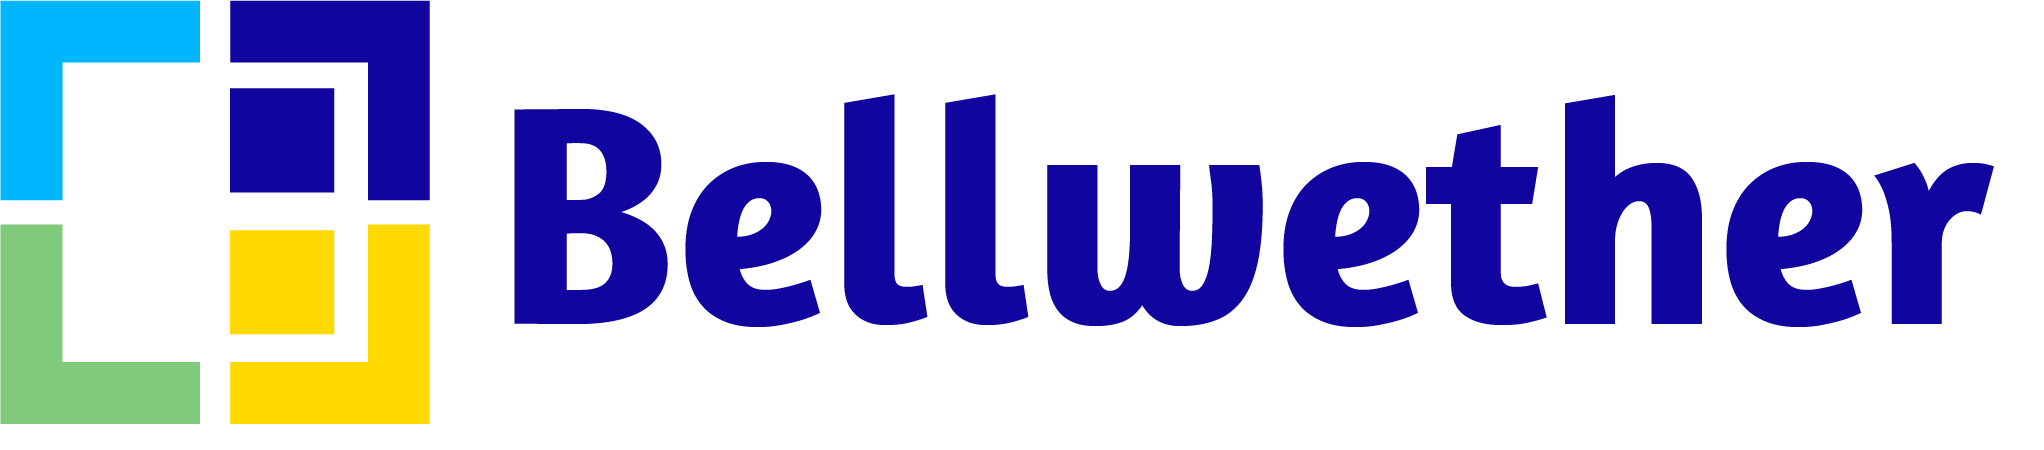 Bellwether_Logo_new